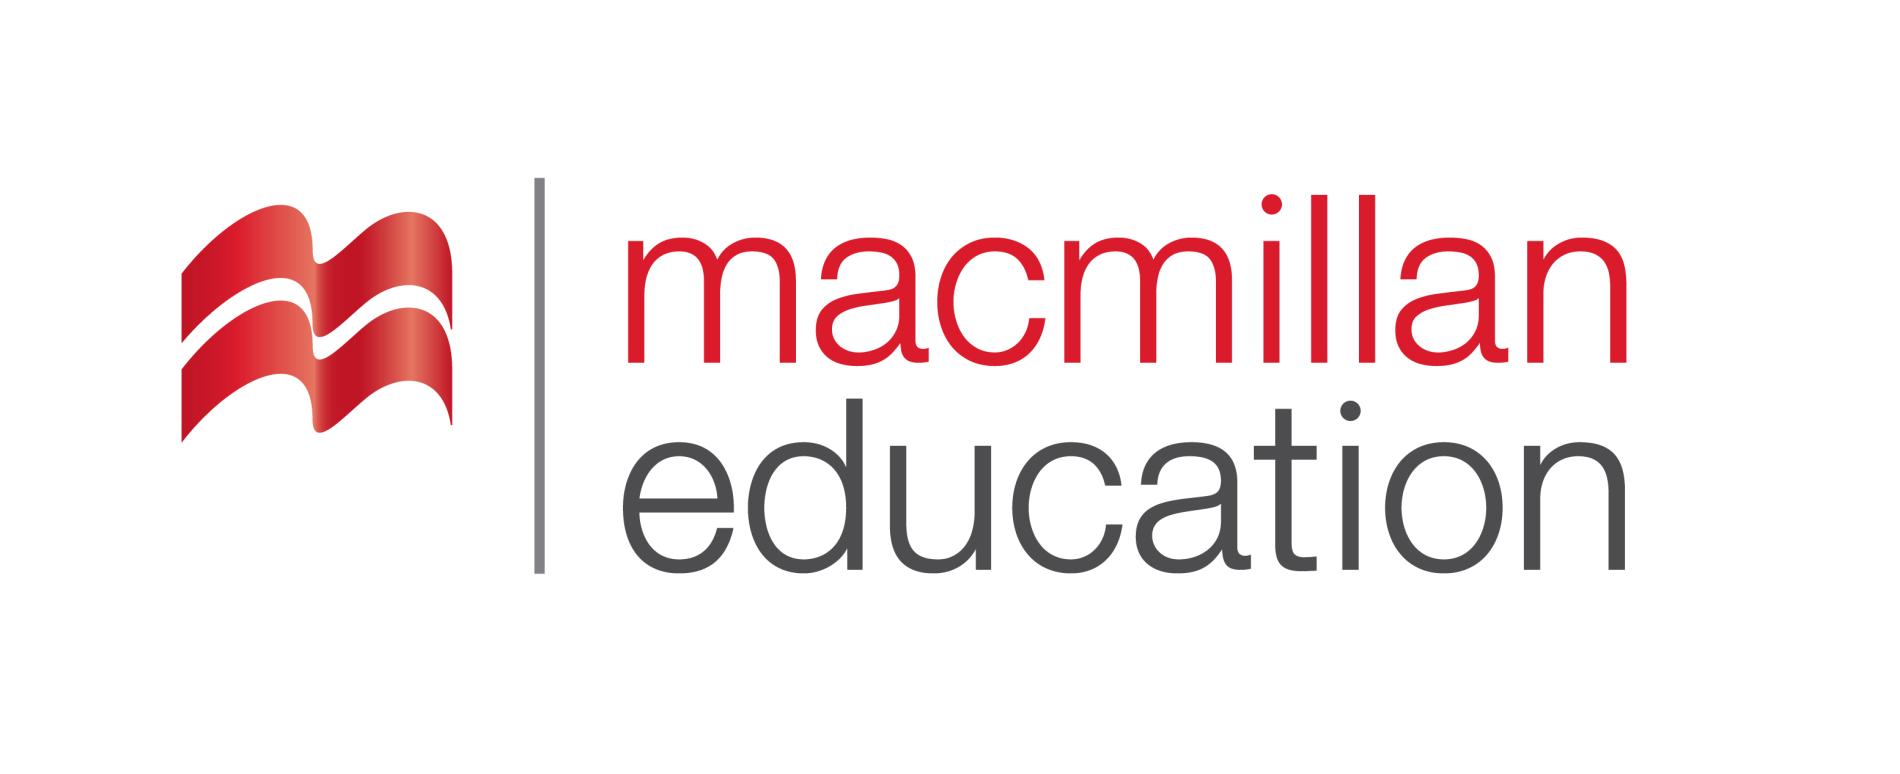 Macmillan_logo.png